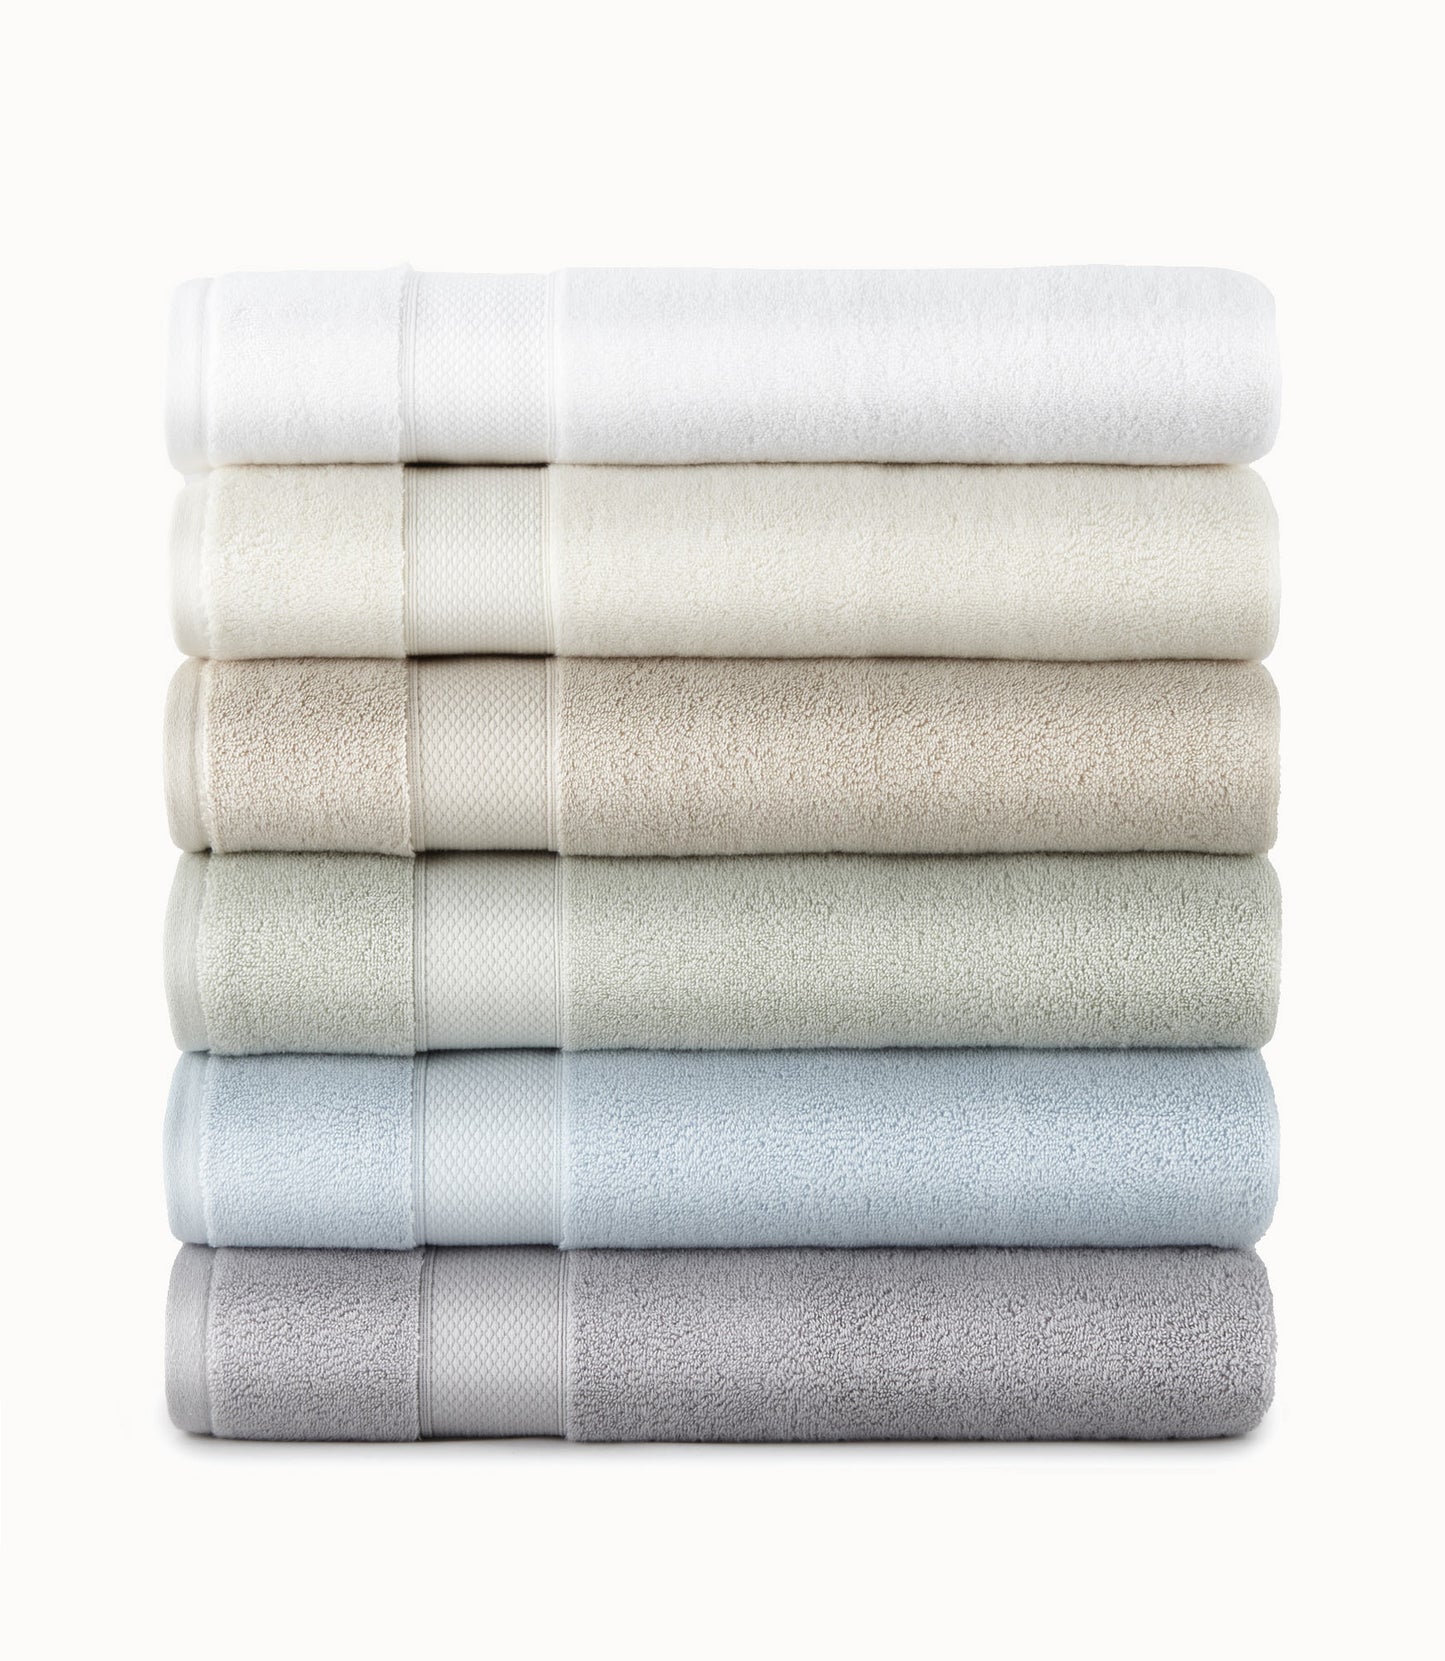 Peacock Alley Dream At Home Bath Sheet Towel 60 x 35 White/Gray